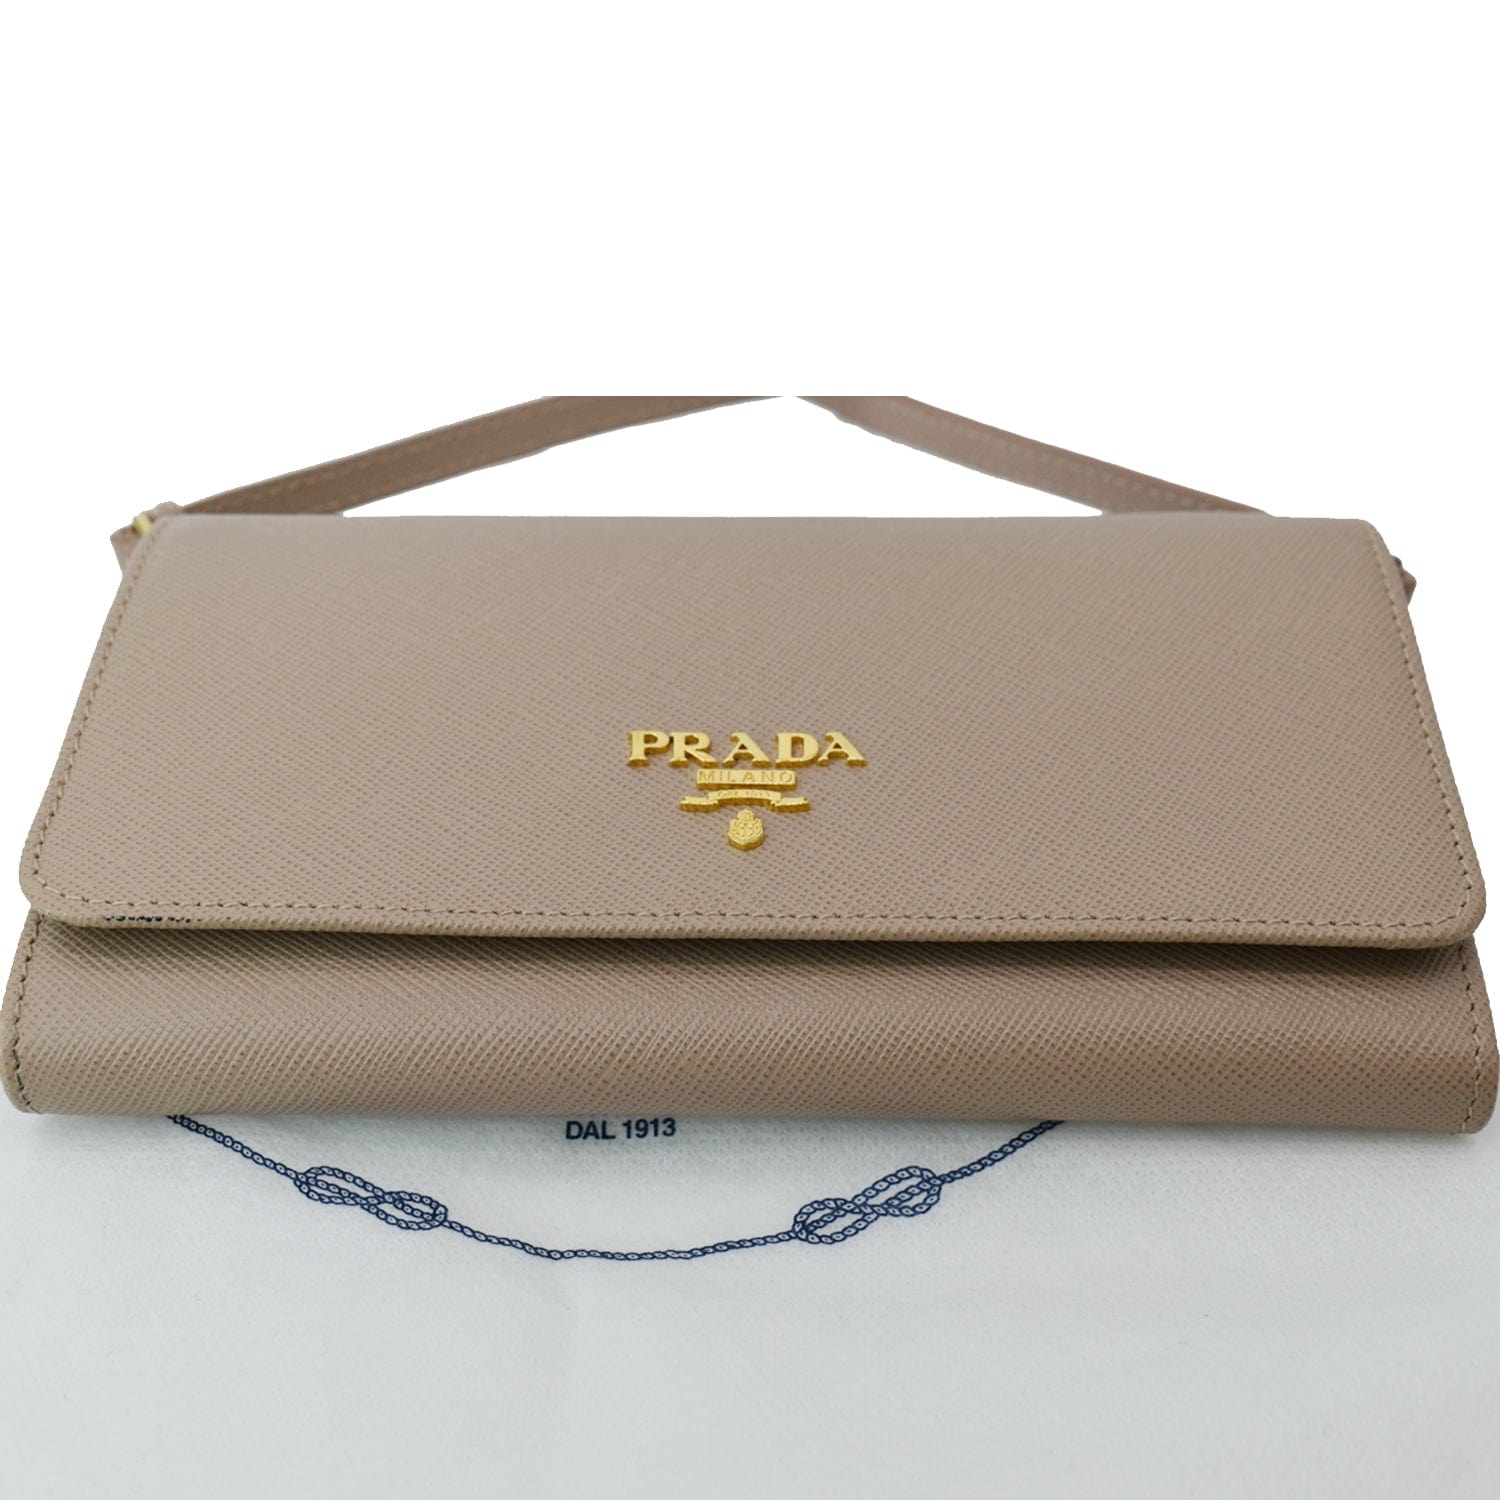 Prada Mini Saffiano Leather Crossbody Bag on SALE